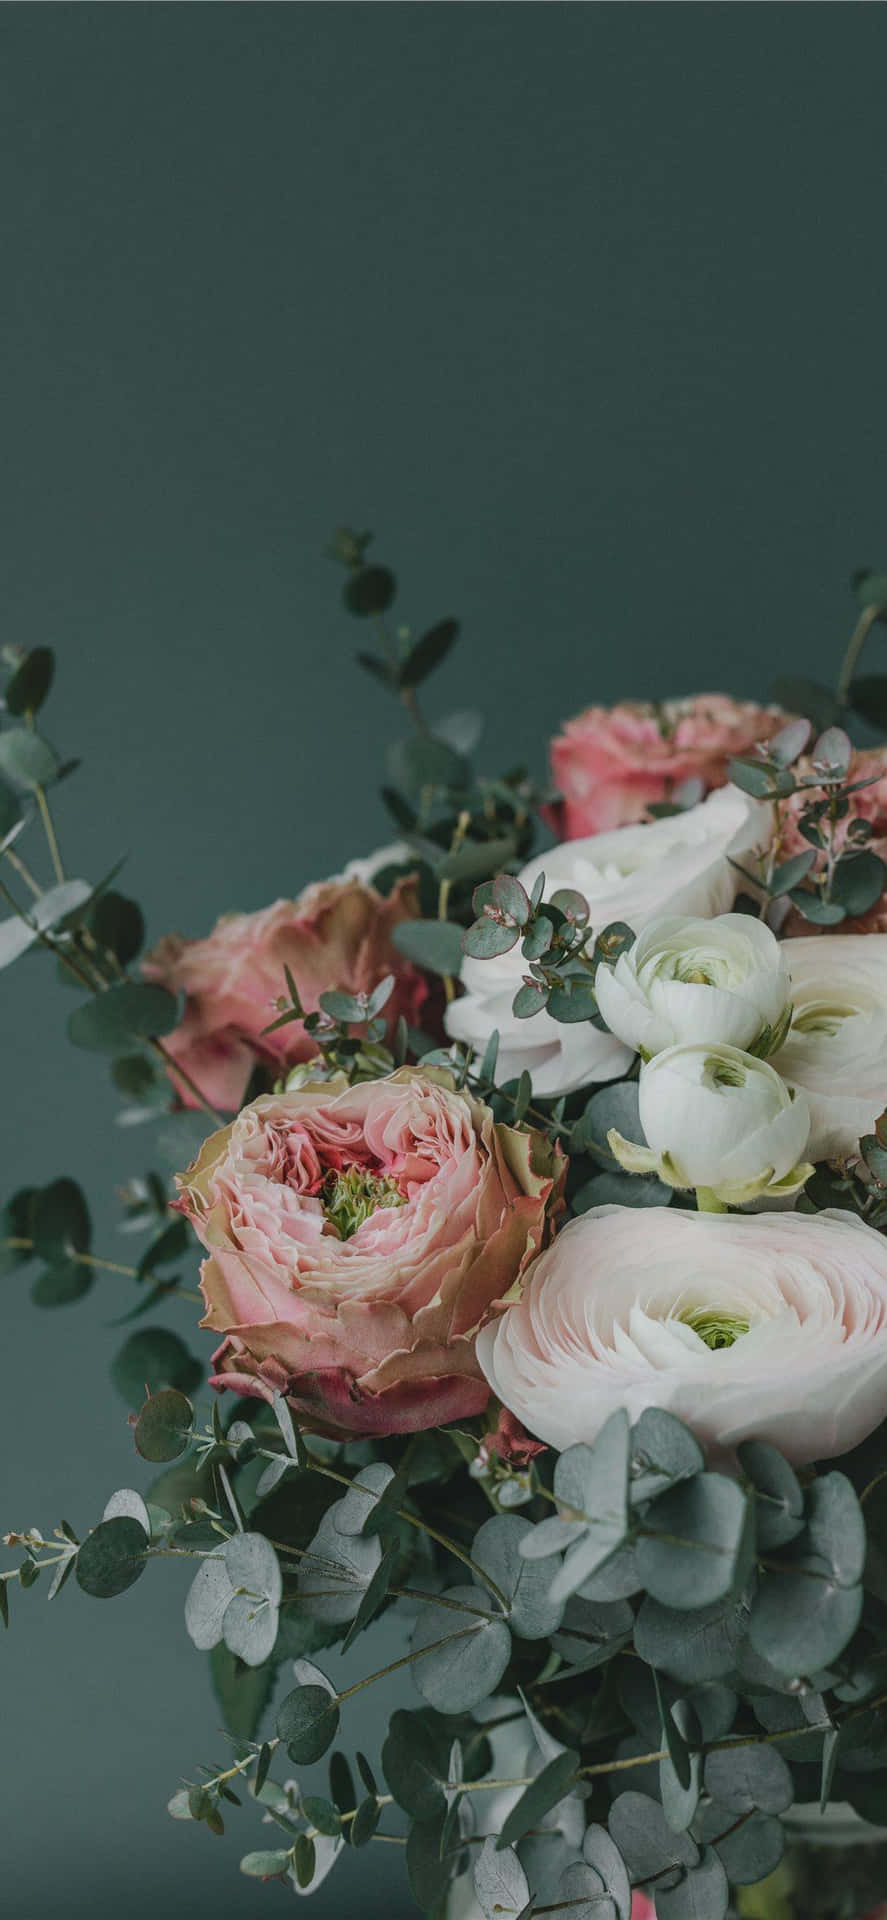 Stunning Floral Arrangement with Diverse Mix of Fresh Flowers Wallpaper